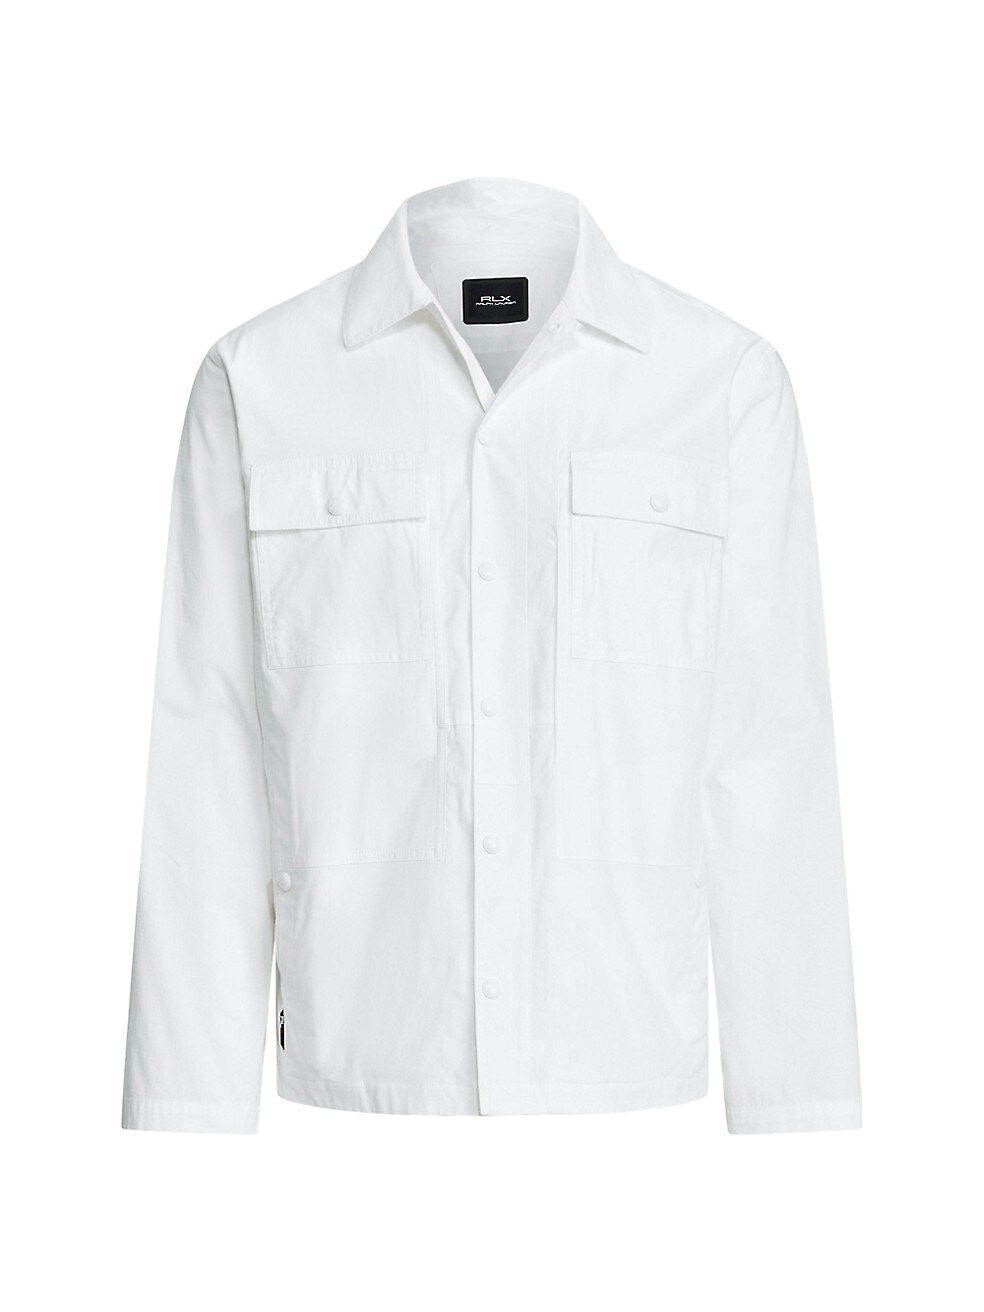 RLX Ralph Lauren Ripstop Cotton Field Jacket | Saks Fifth Avenue